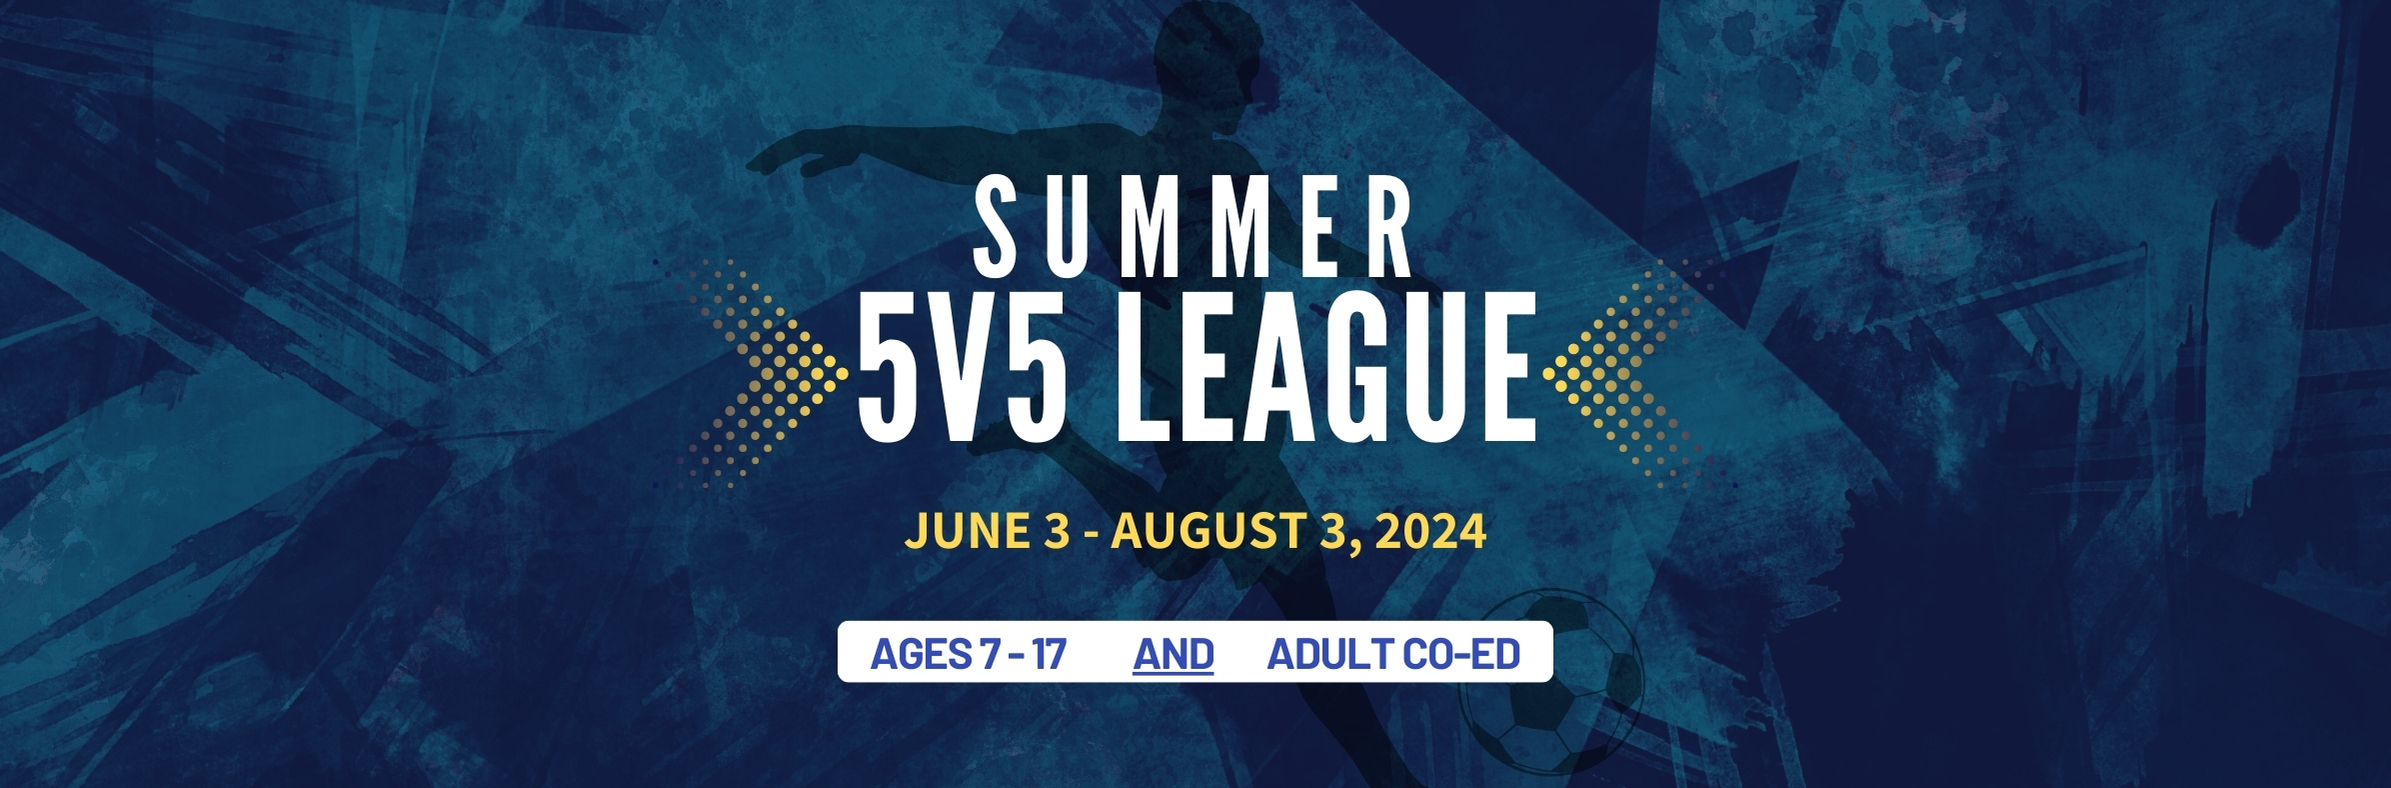 Summer 5v5 League (Website) (5)